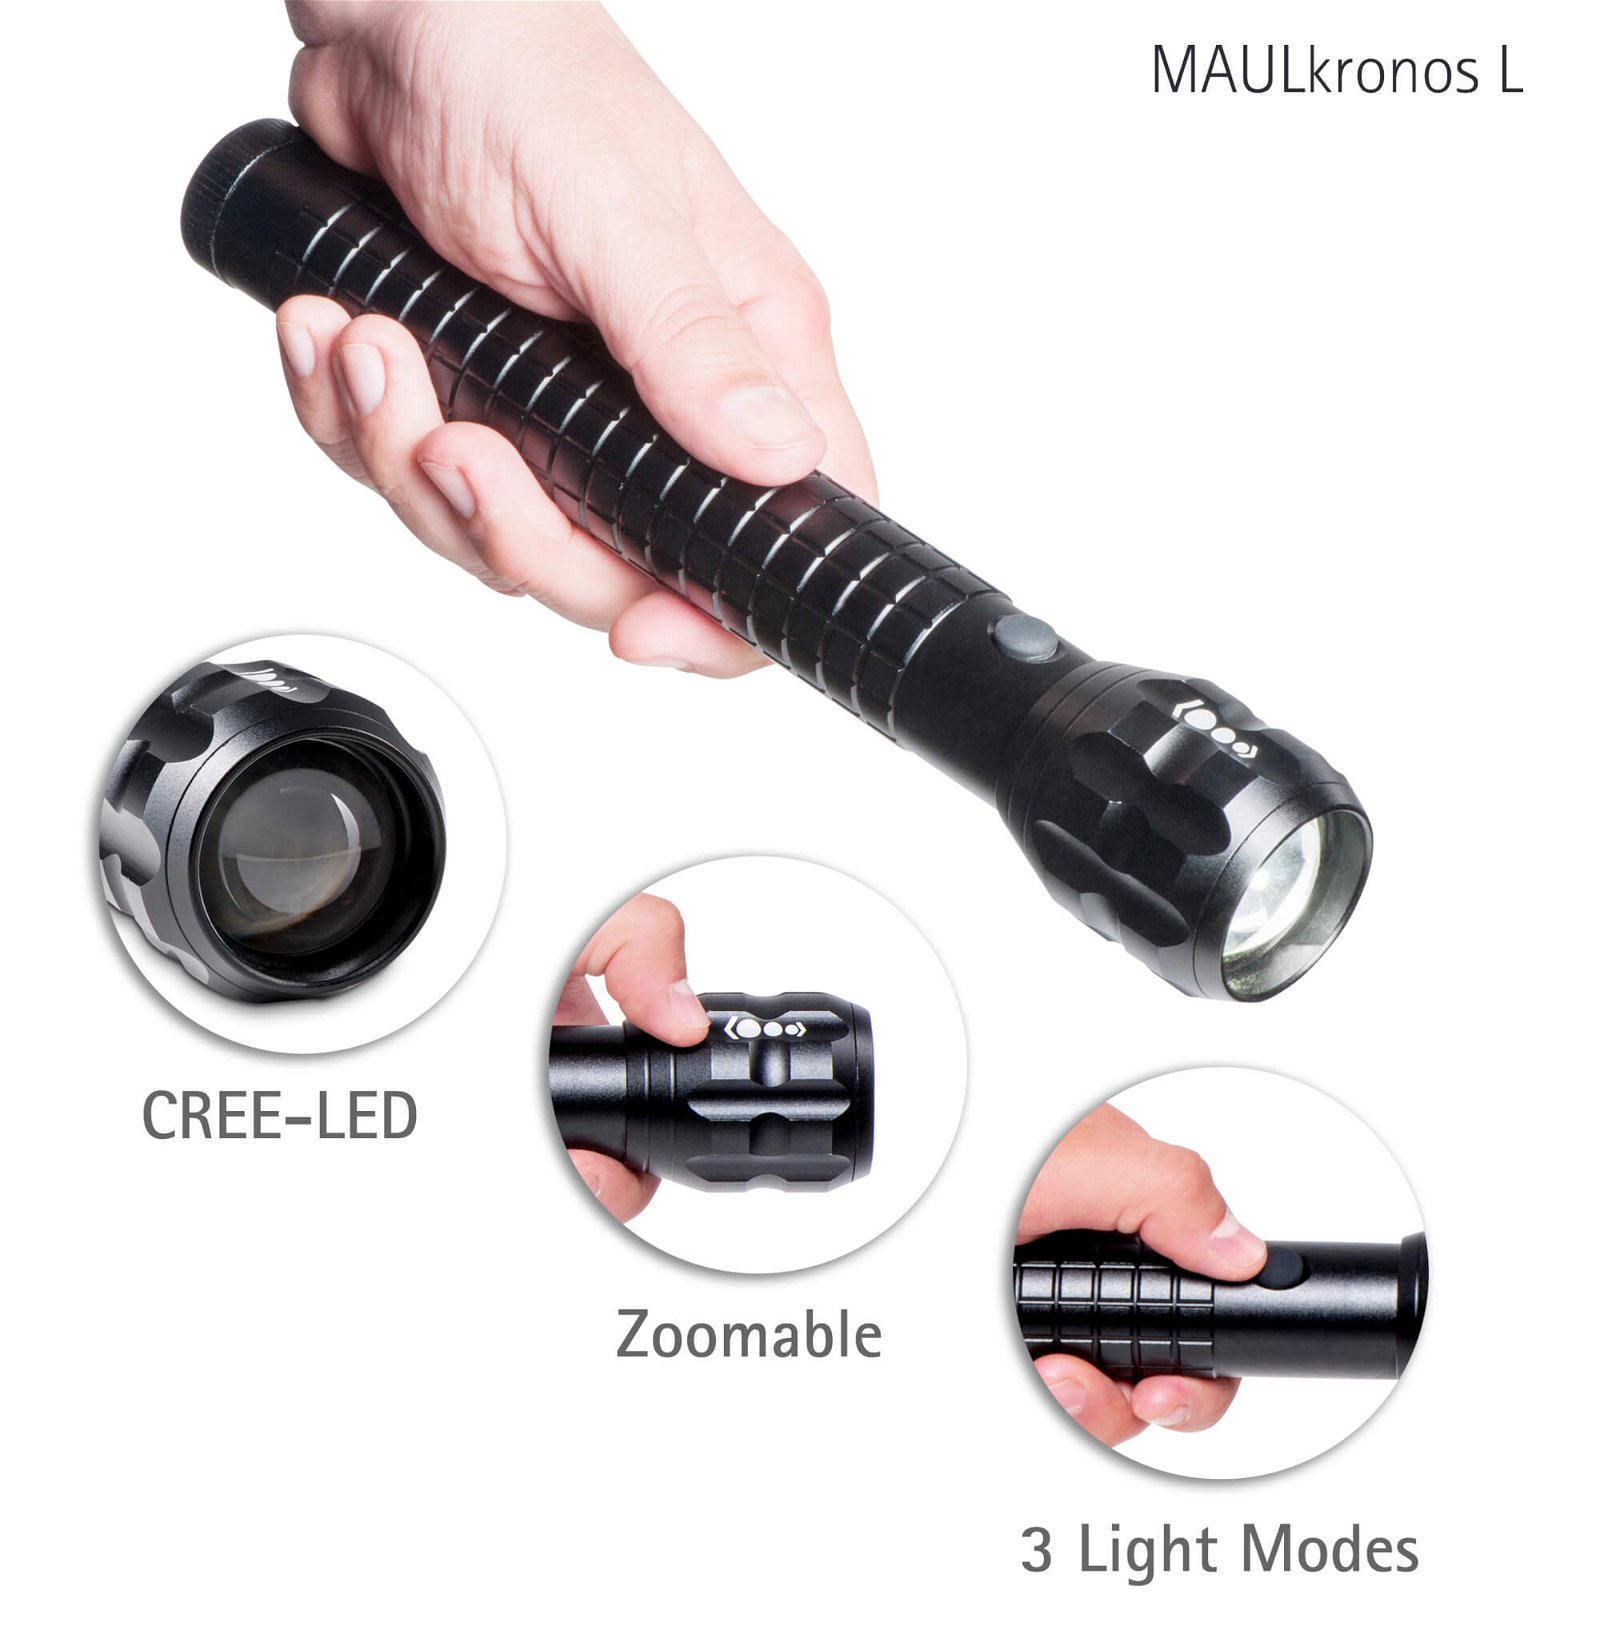 LED-Taschenlampe MAULkronos L - Info